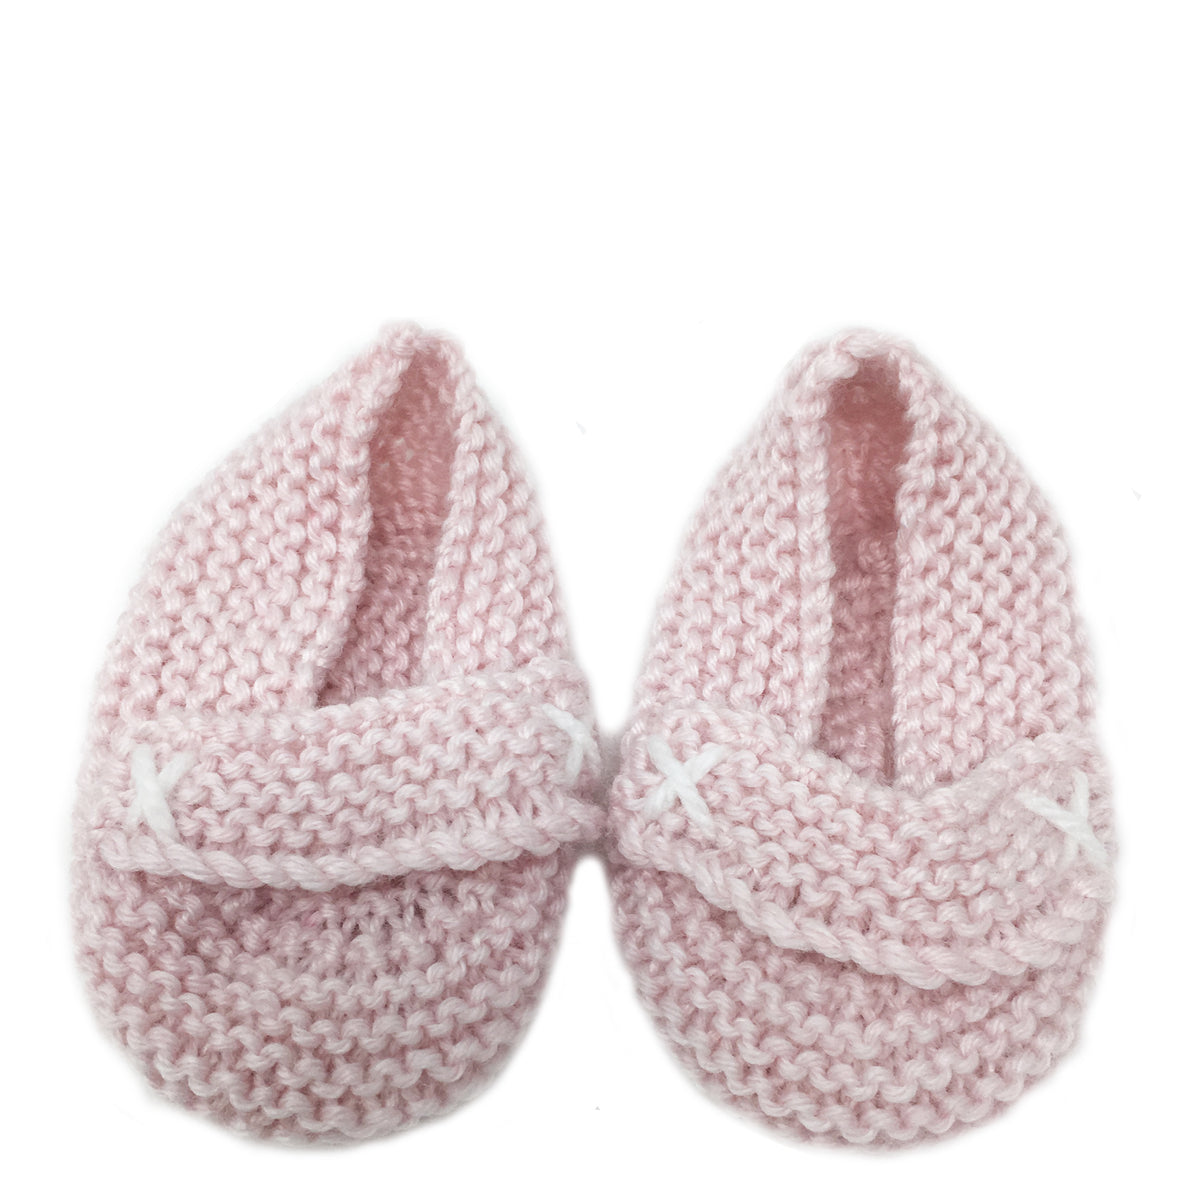 handknit baby booties - pink 0-3 months